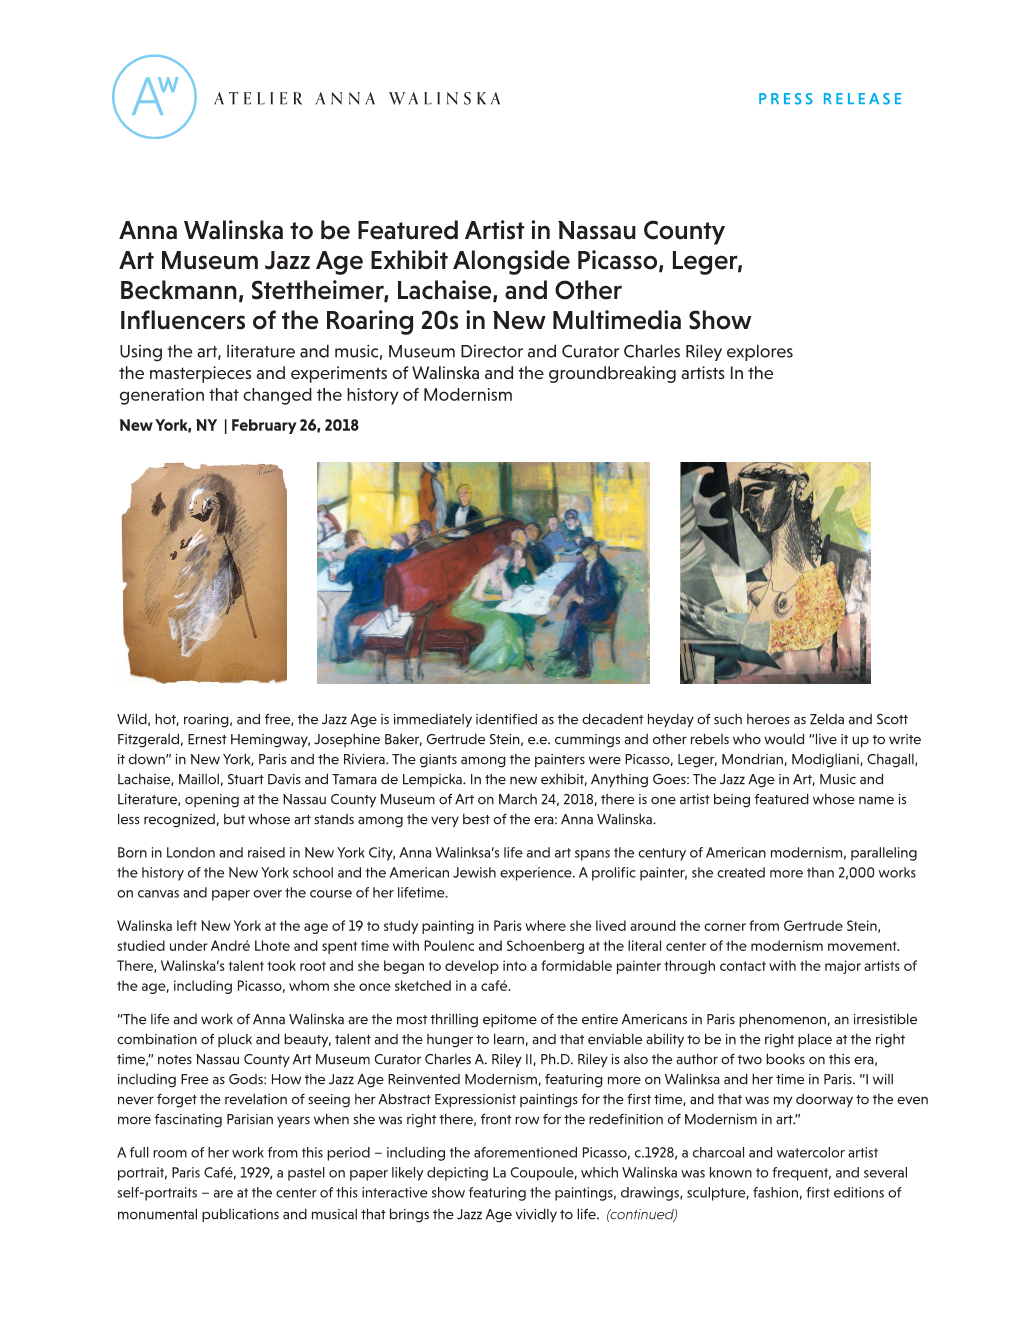 Anna Walinska to Be Featured Artist in Nassau County Art Museum Jazz